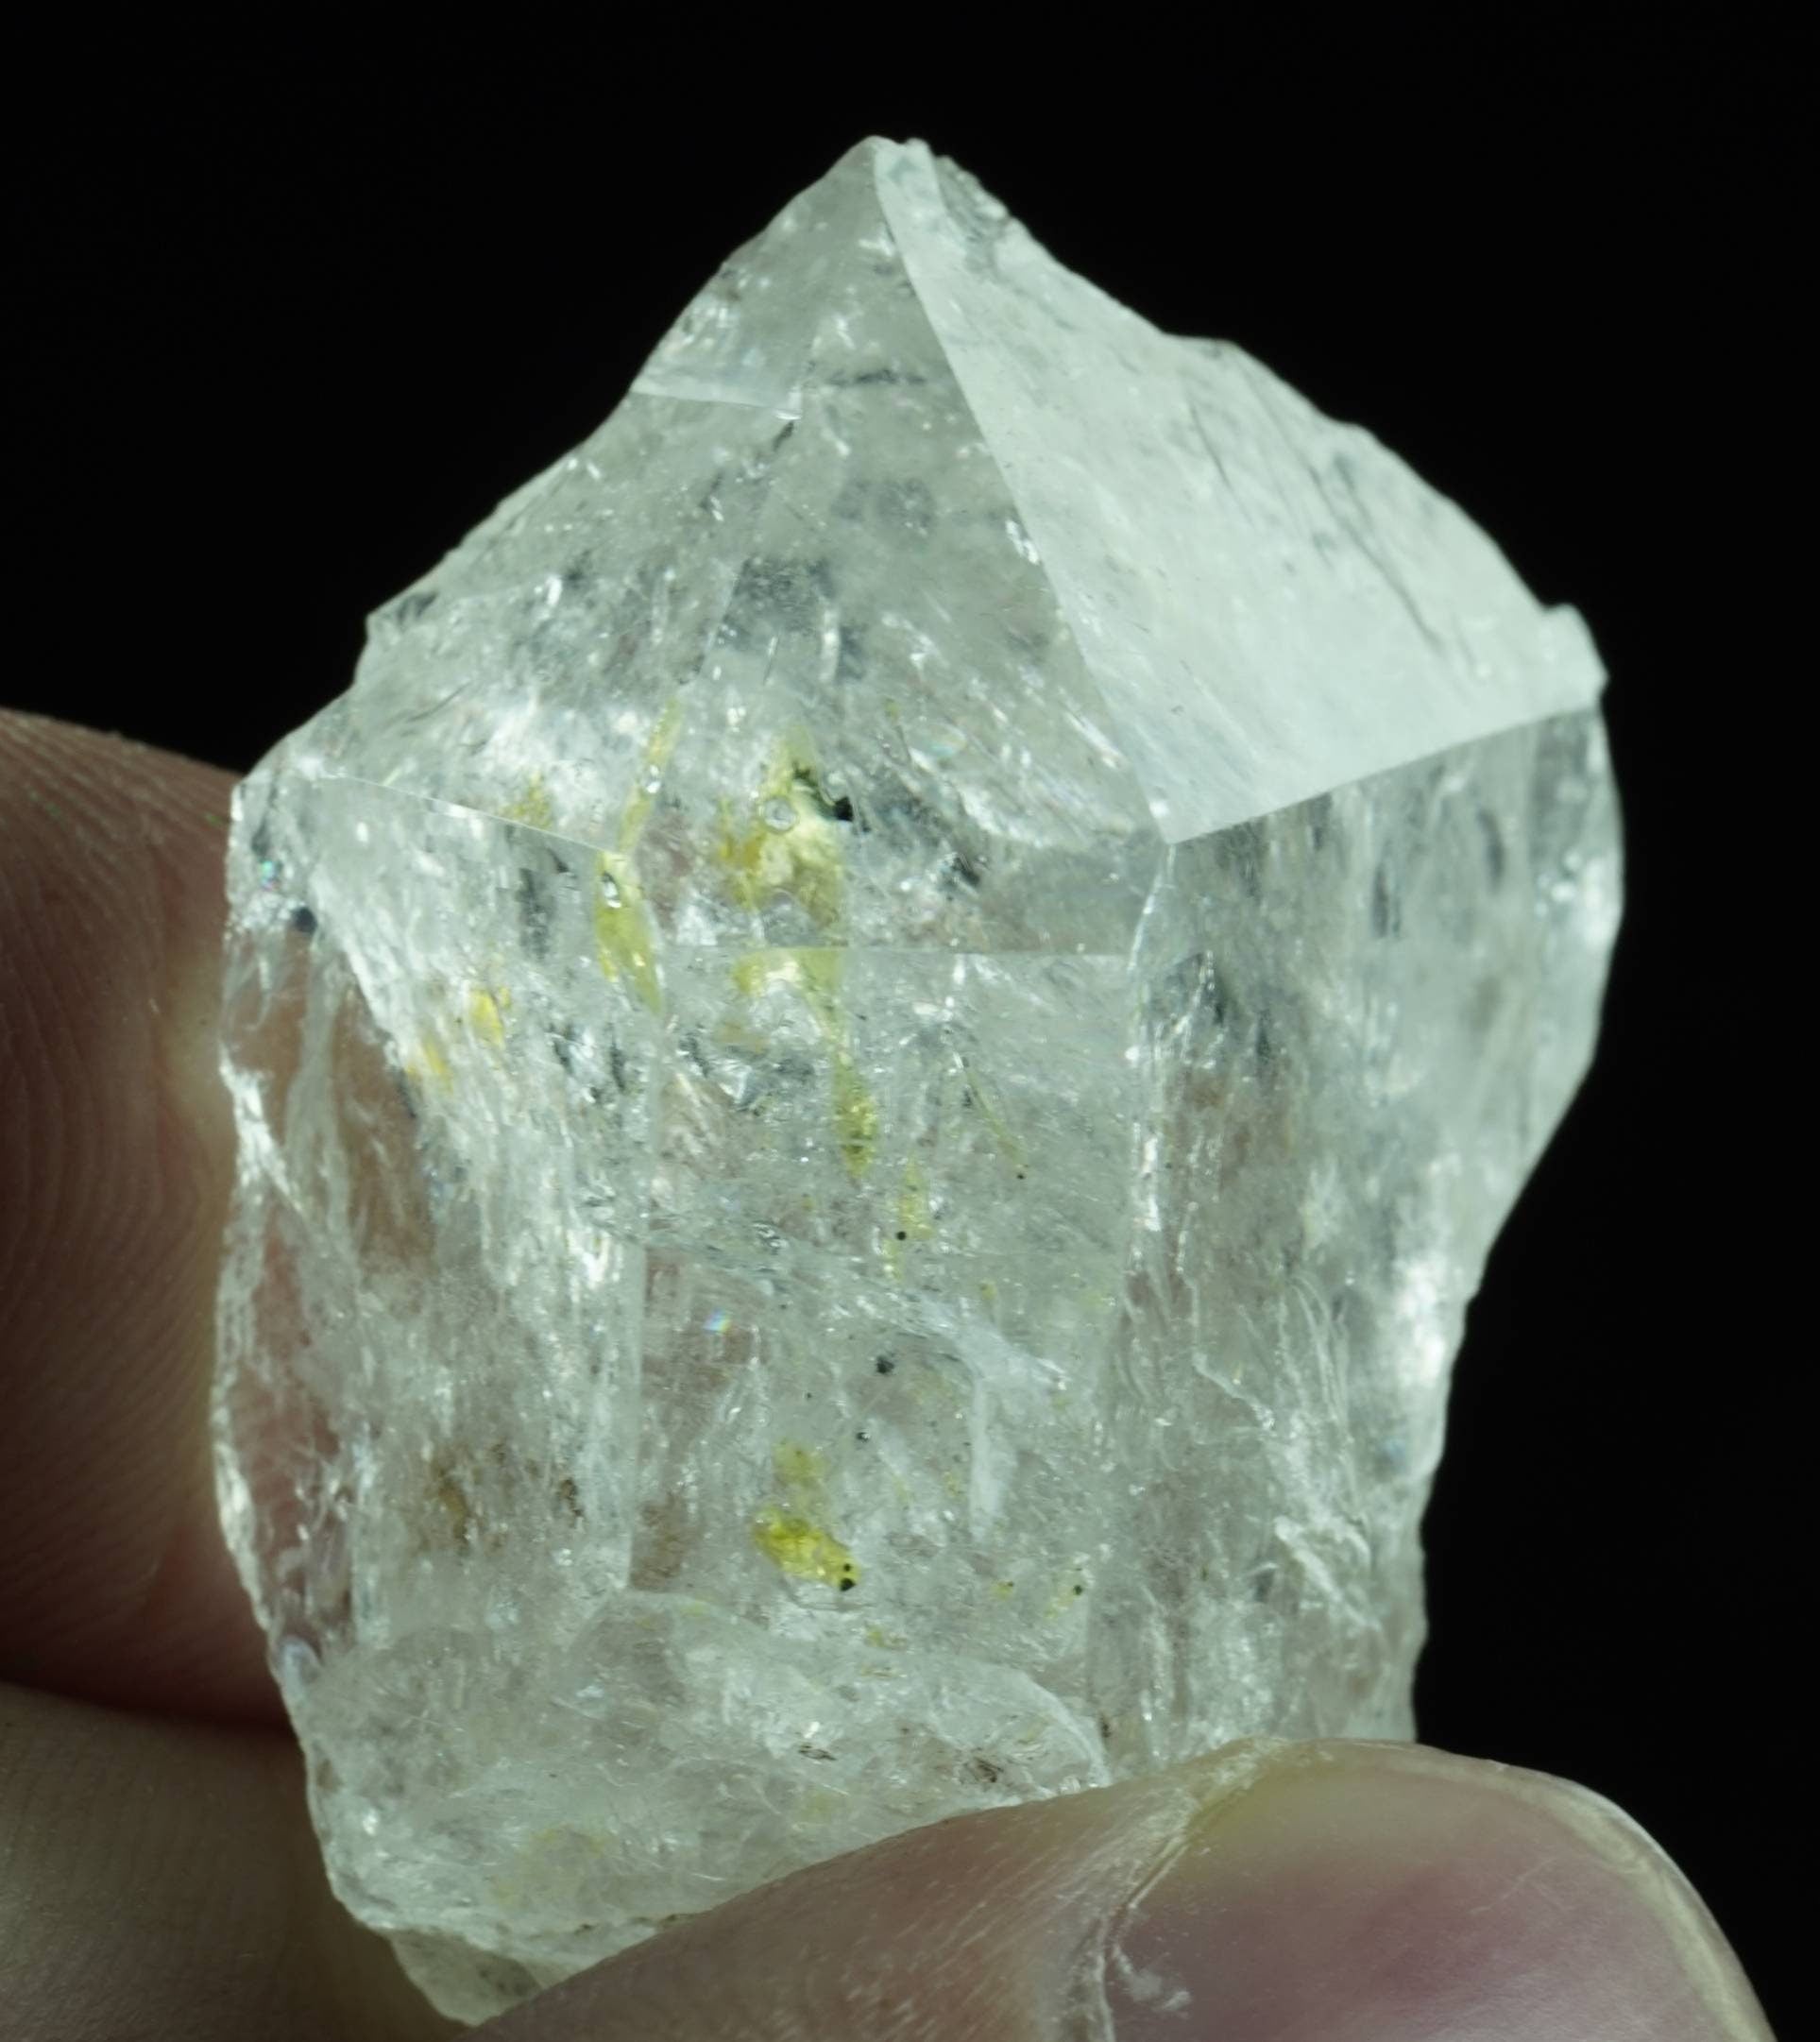 ARSAA GEMS AND MINERALSAesthetic fine quality beautiful UV reactive petroleum quartz crystal from Balochistan Pakistan, weight 15.9 grams - Premium  from ARSAA GEMS AND MINERALS - Just $75.00! Shop now at ARSAA GEMS AND MINERALS